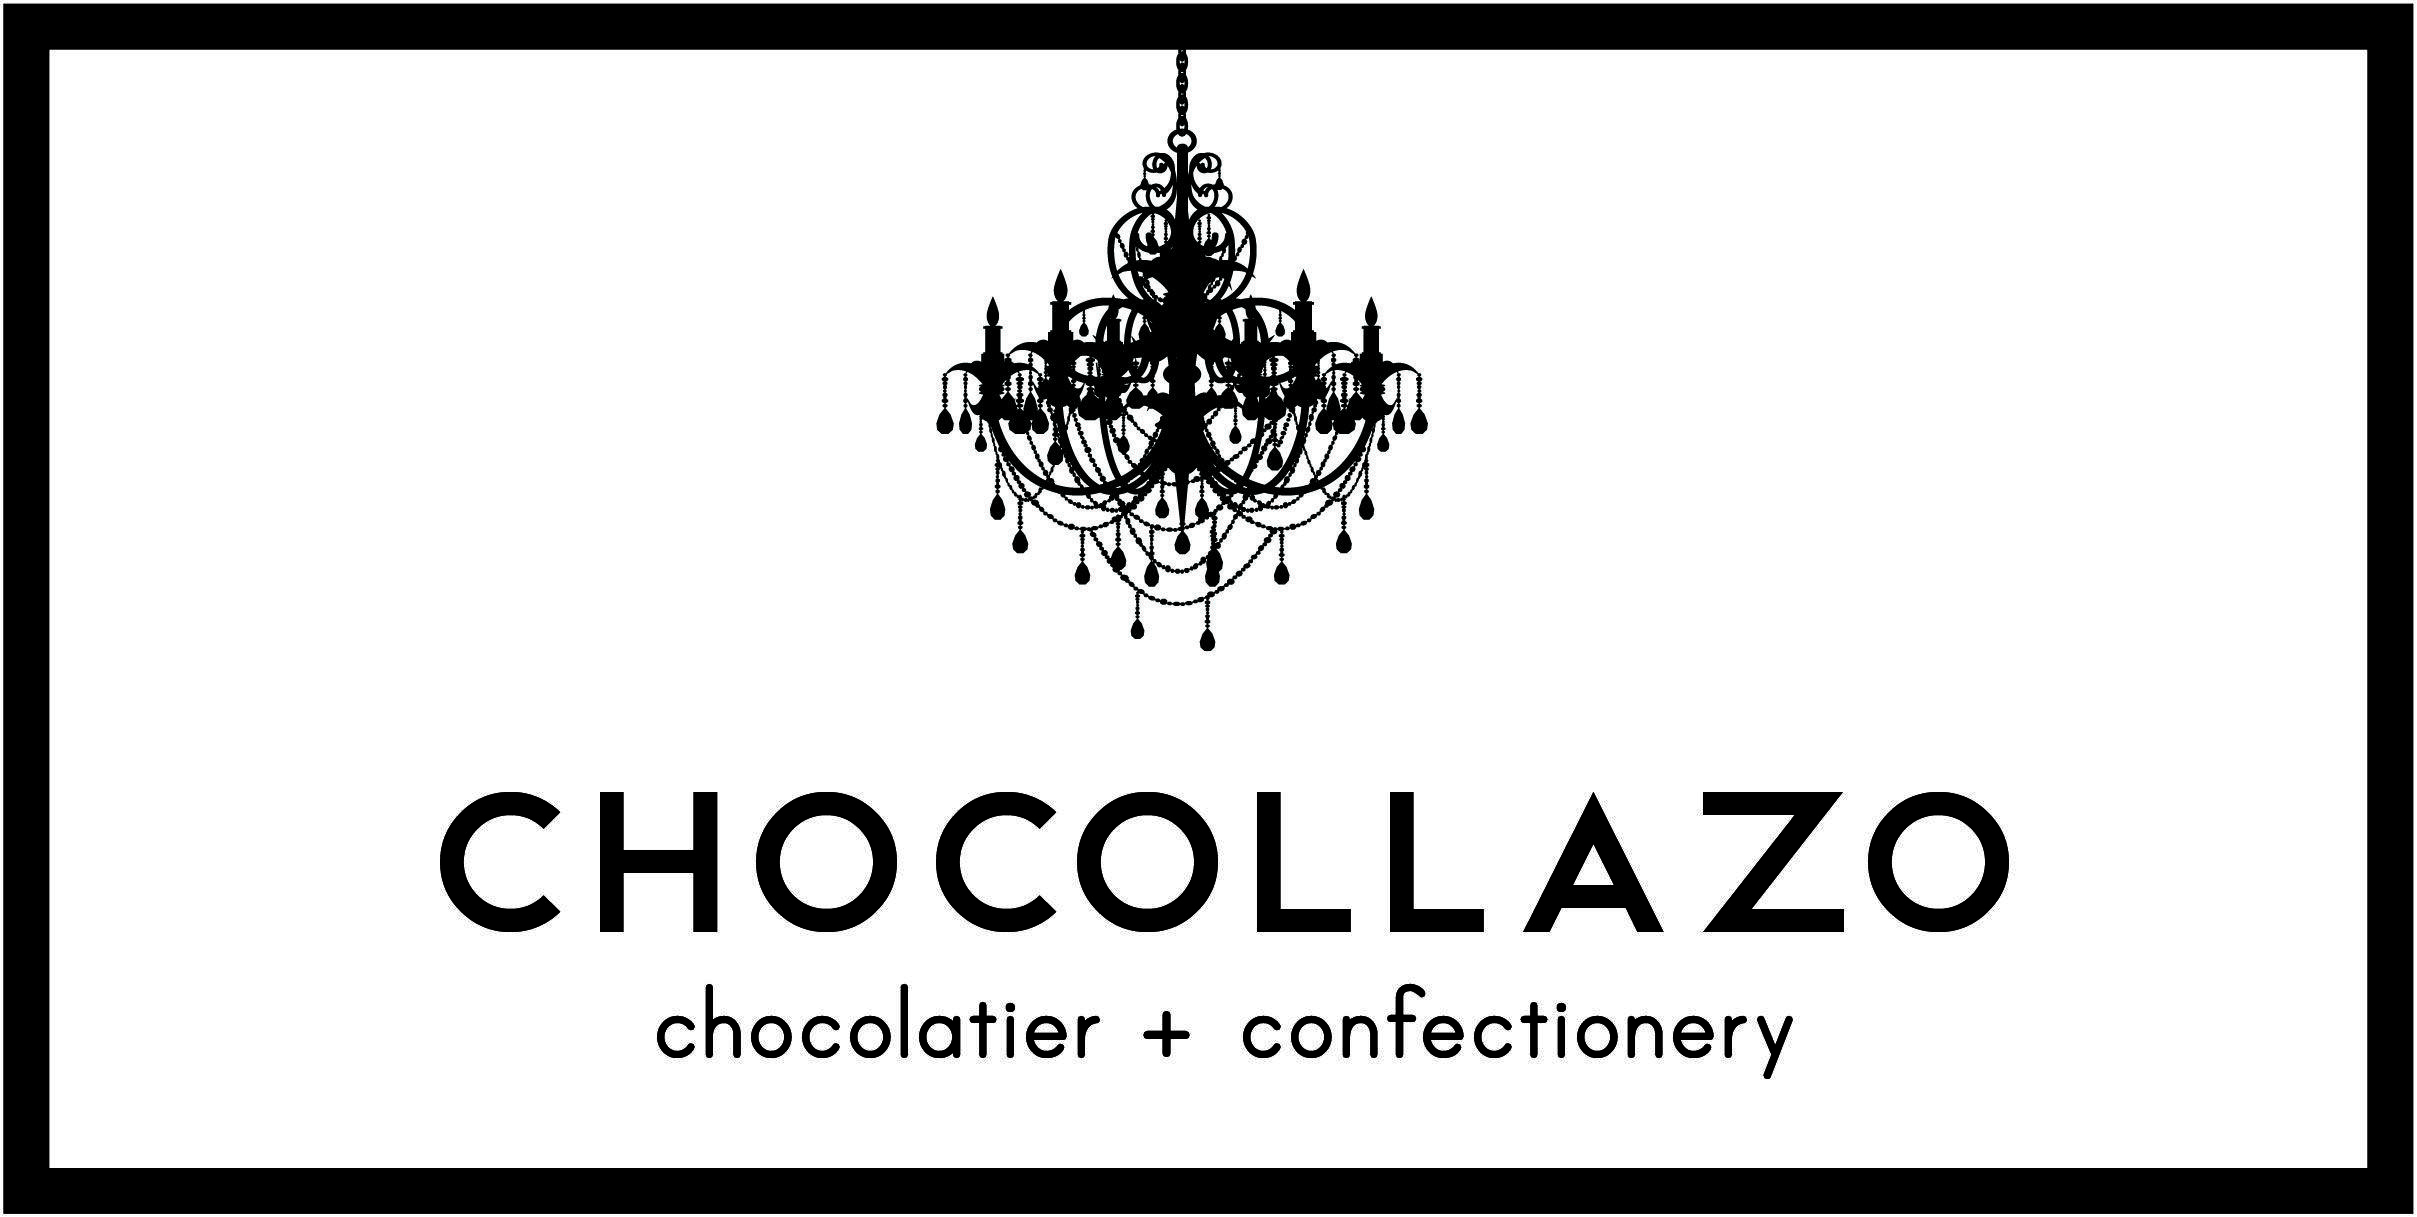 Black and White C Logo - shop — Chocollazo